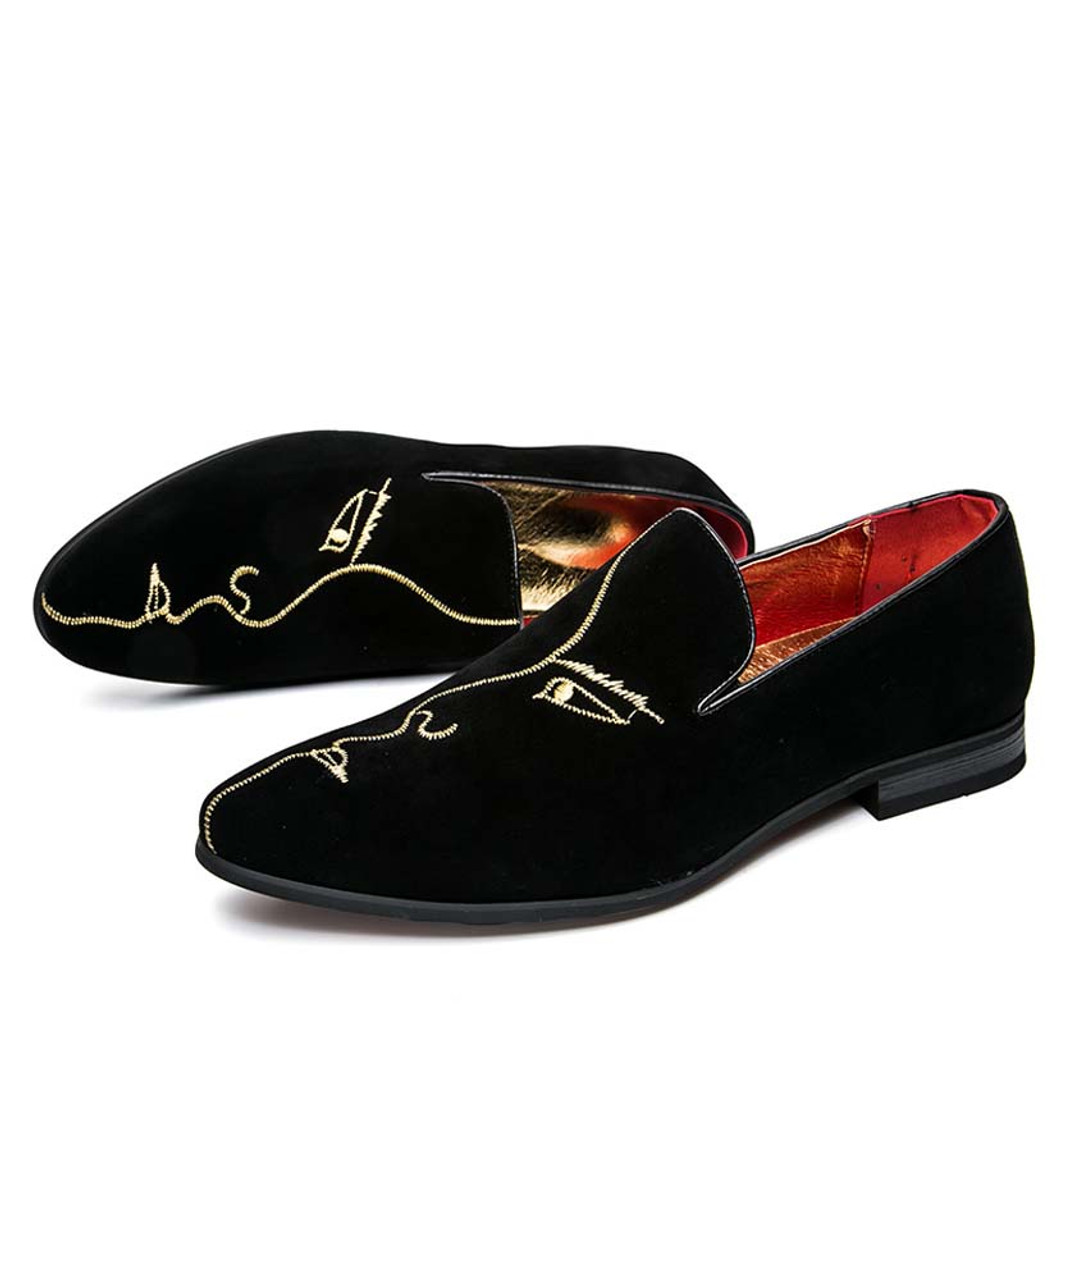 Black suede face sketch pattern slip on dress shoe | Mens dress shoes ...